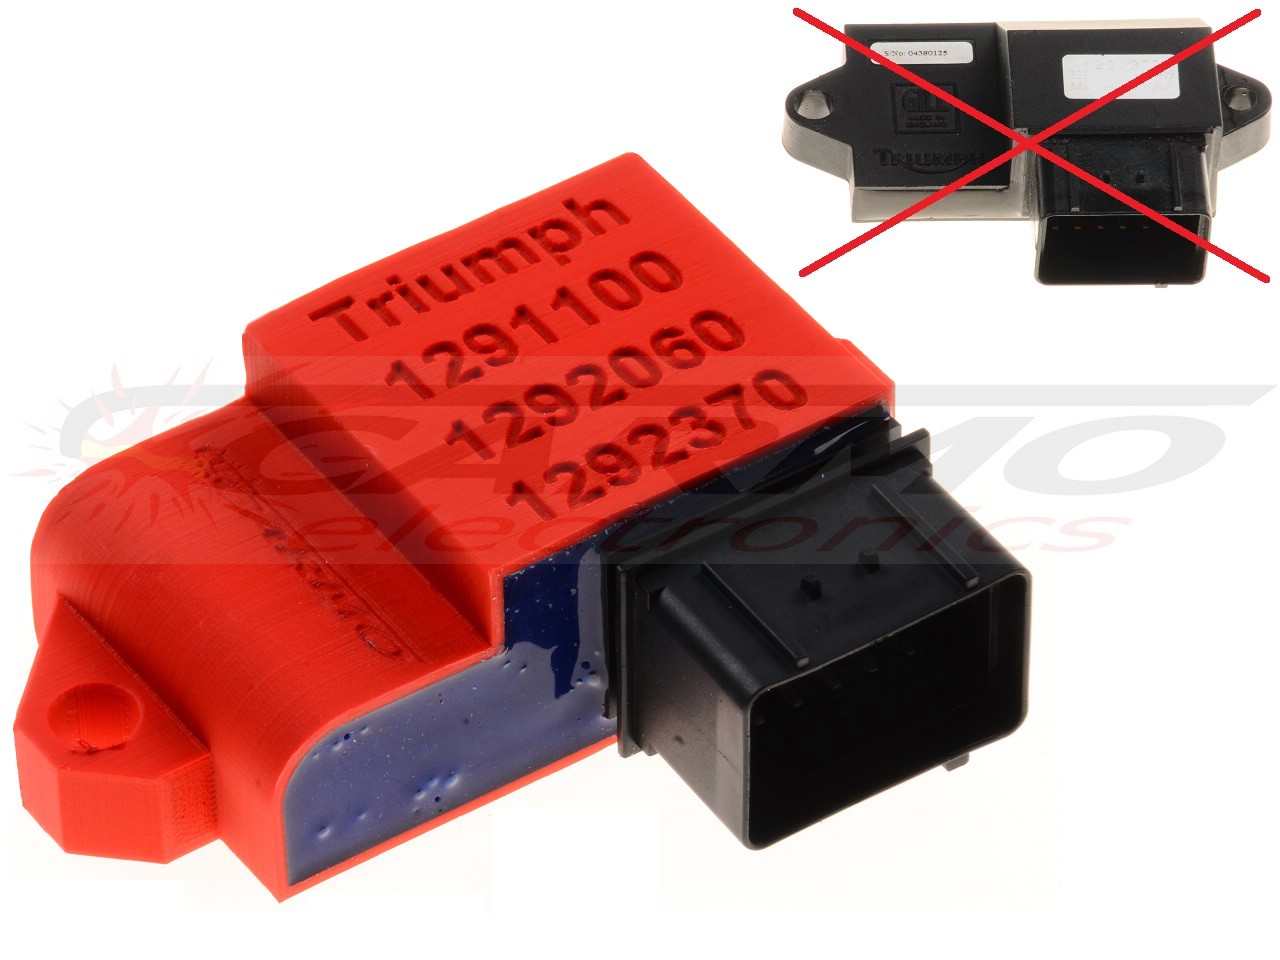 Triumph Speedmaster (1292060, T1292060) igniter ignition module CDI TCI Box - Clique na Imagem para Fechar